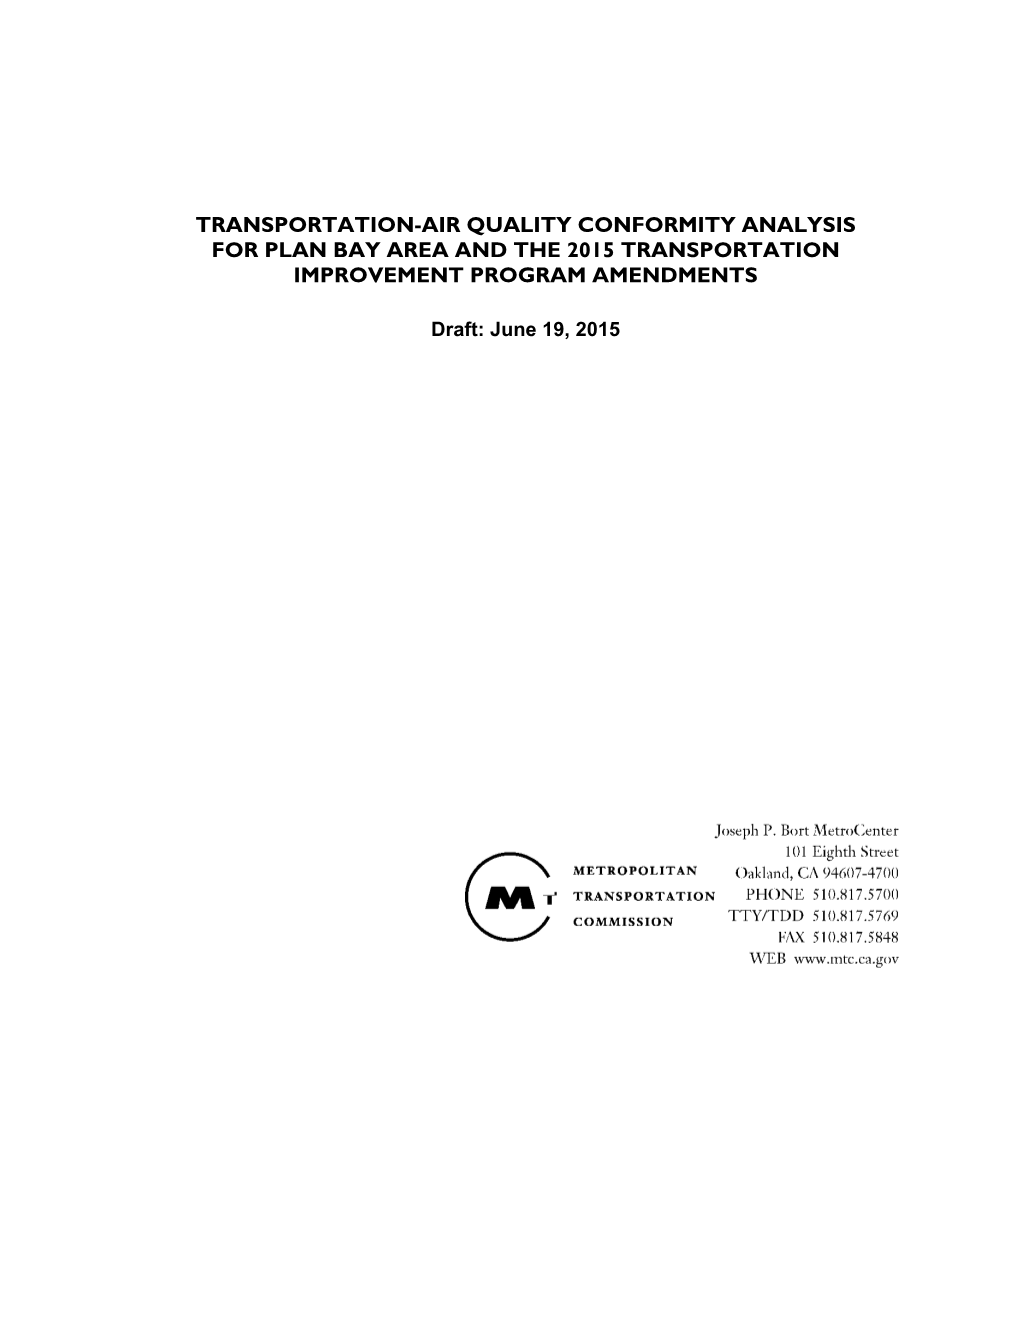 Transportation-Air Quality Conformity Analysis for Plan Bay Area and the 2015 Transportation Improvement Program Amendments